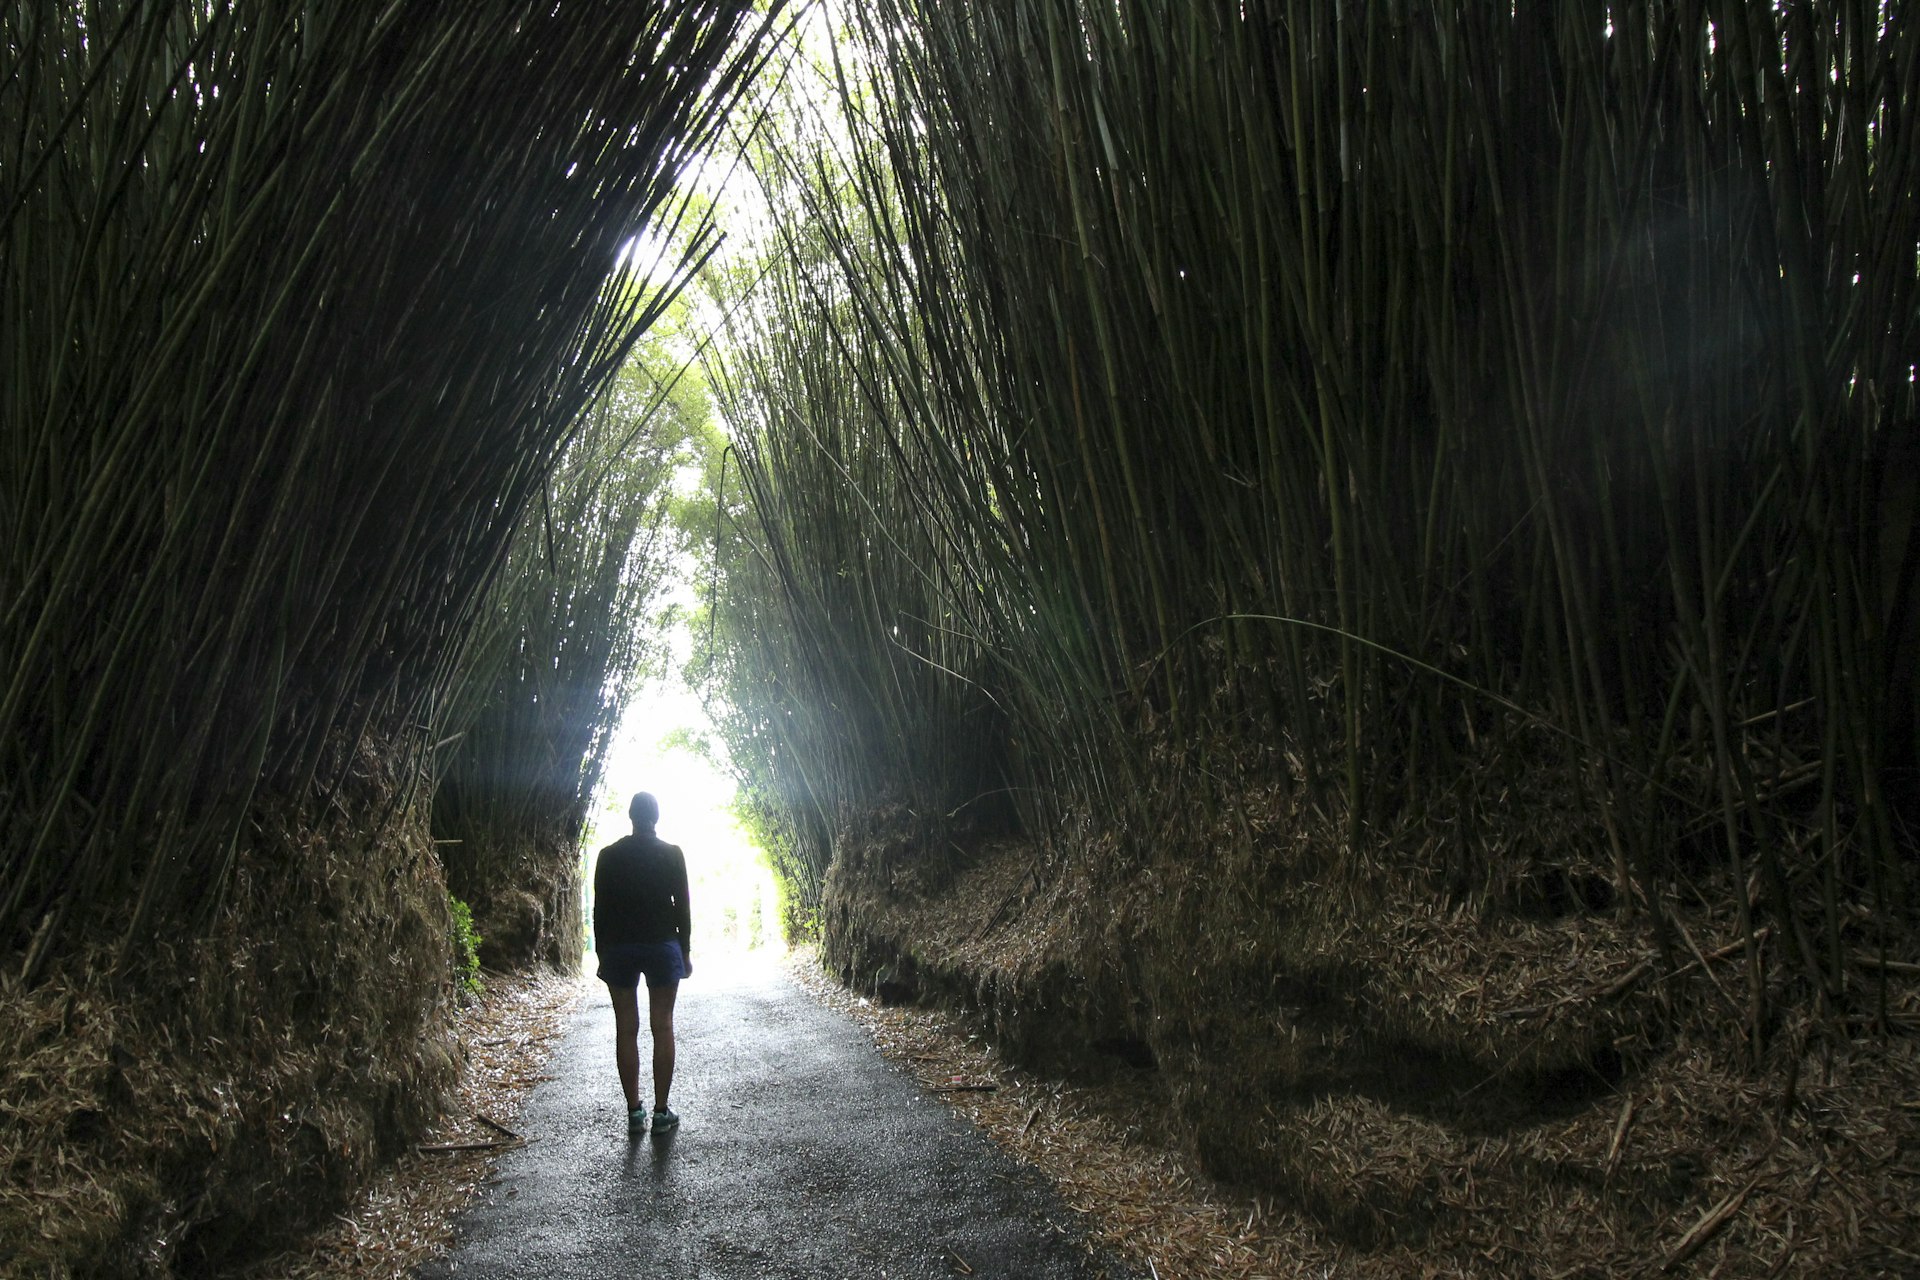 Walking through the bamboo tunnel